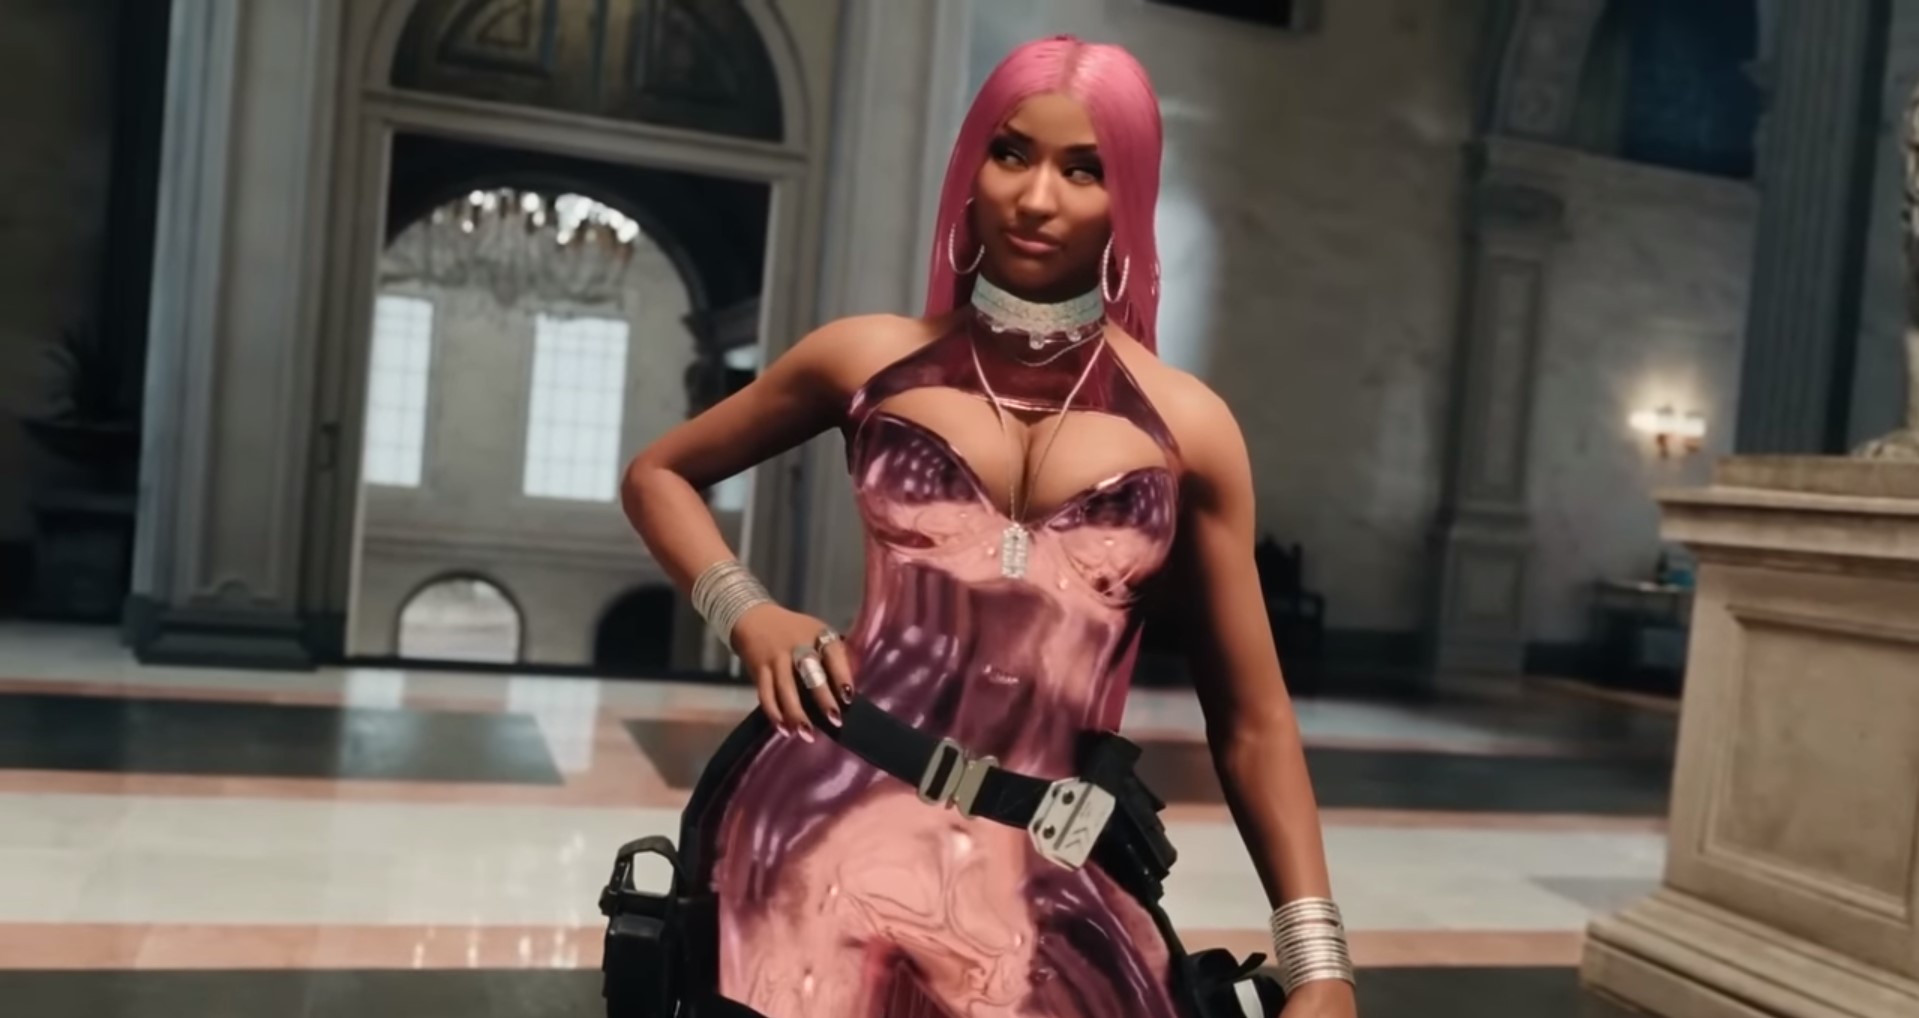 Nicki Minaj Operator Bundle In COD Features Too Much Pink, Butt, And Badass